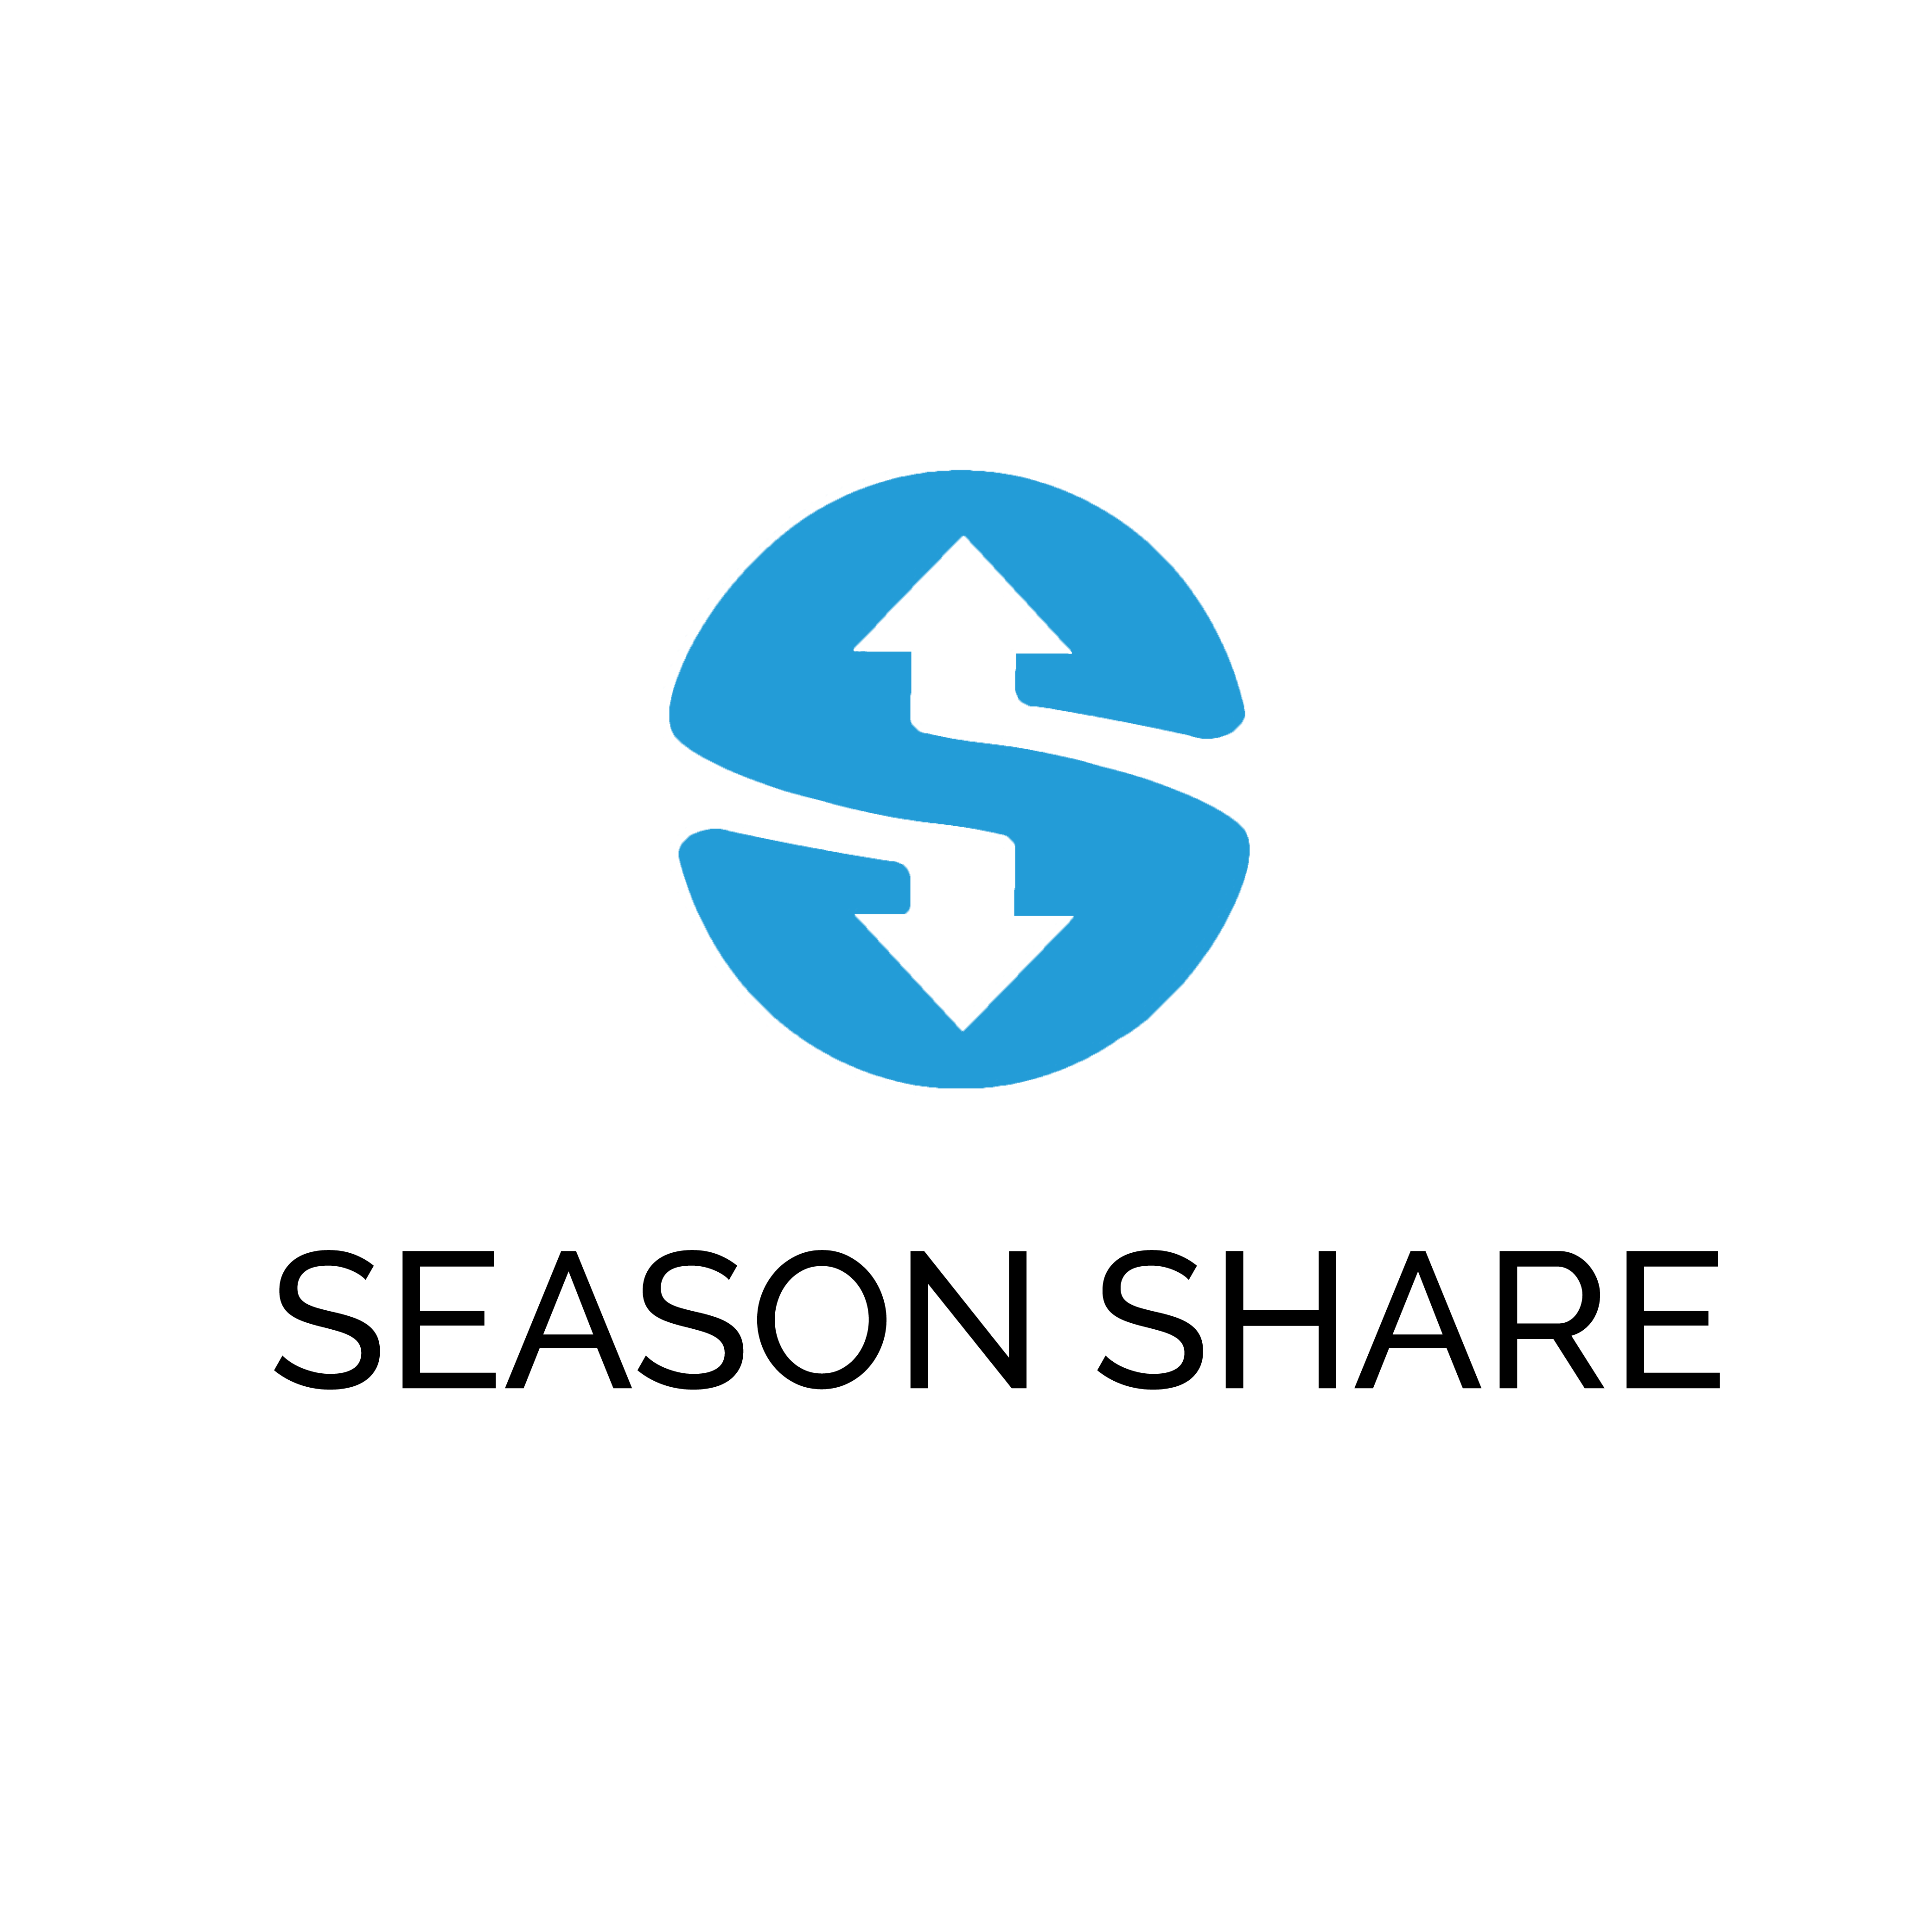 Share Logo - Split Season Tickets - Sports Season Tickets - Season Share